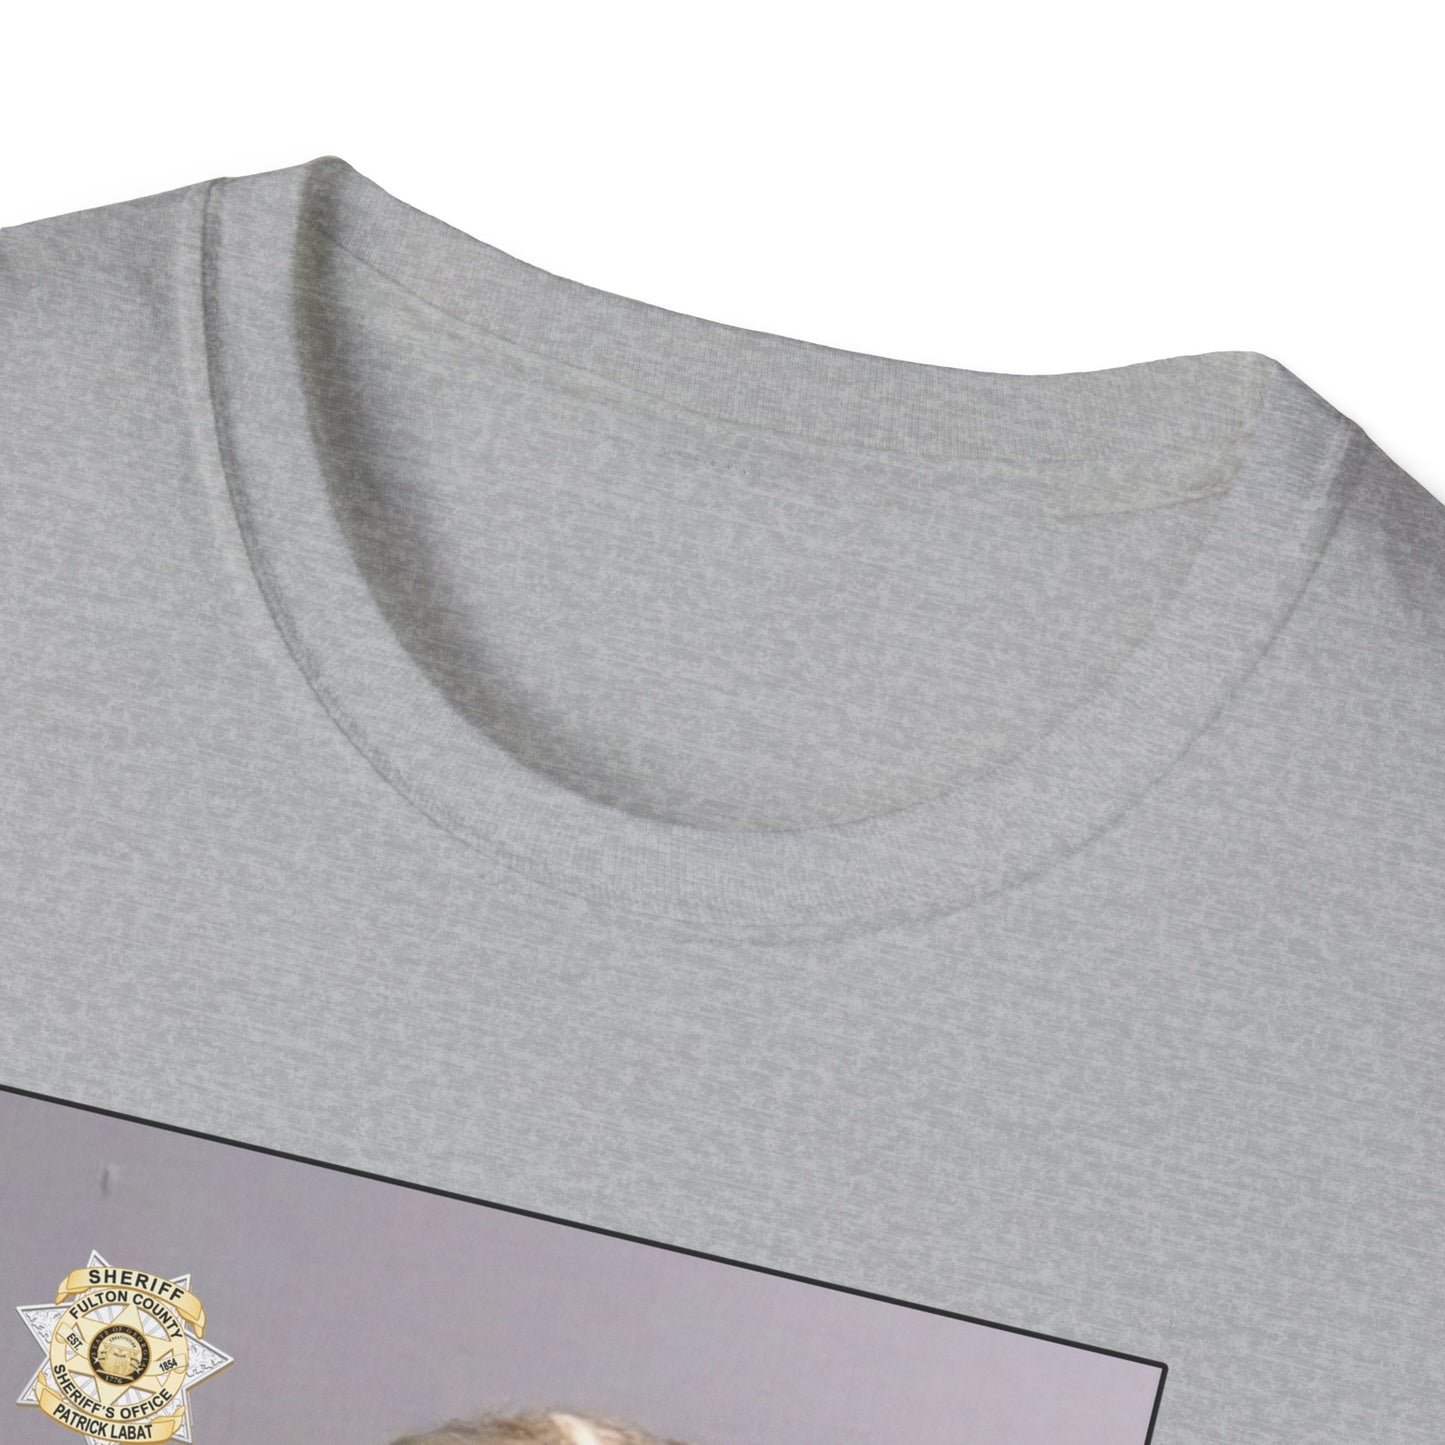 Donald Trump Mug Shot T-Shirt Never Surrender -  Fulton County Jail Official Donald Trump mugshot